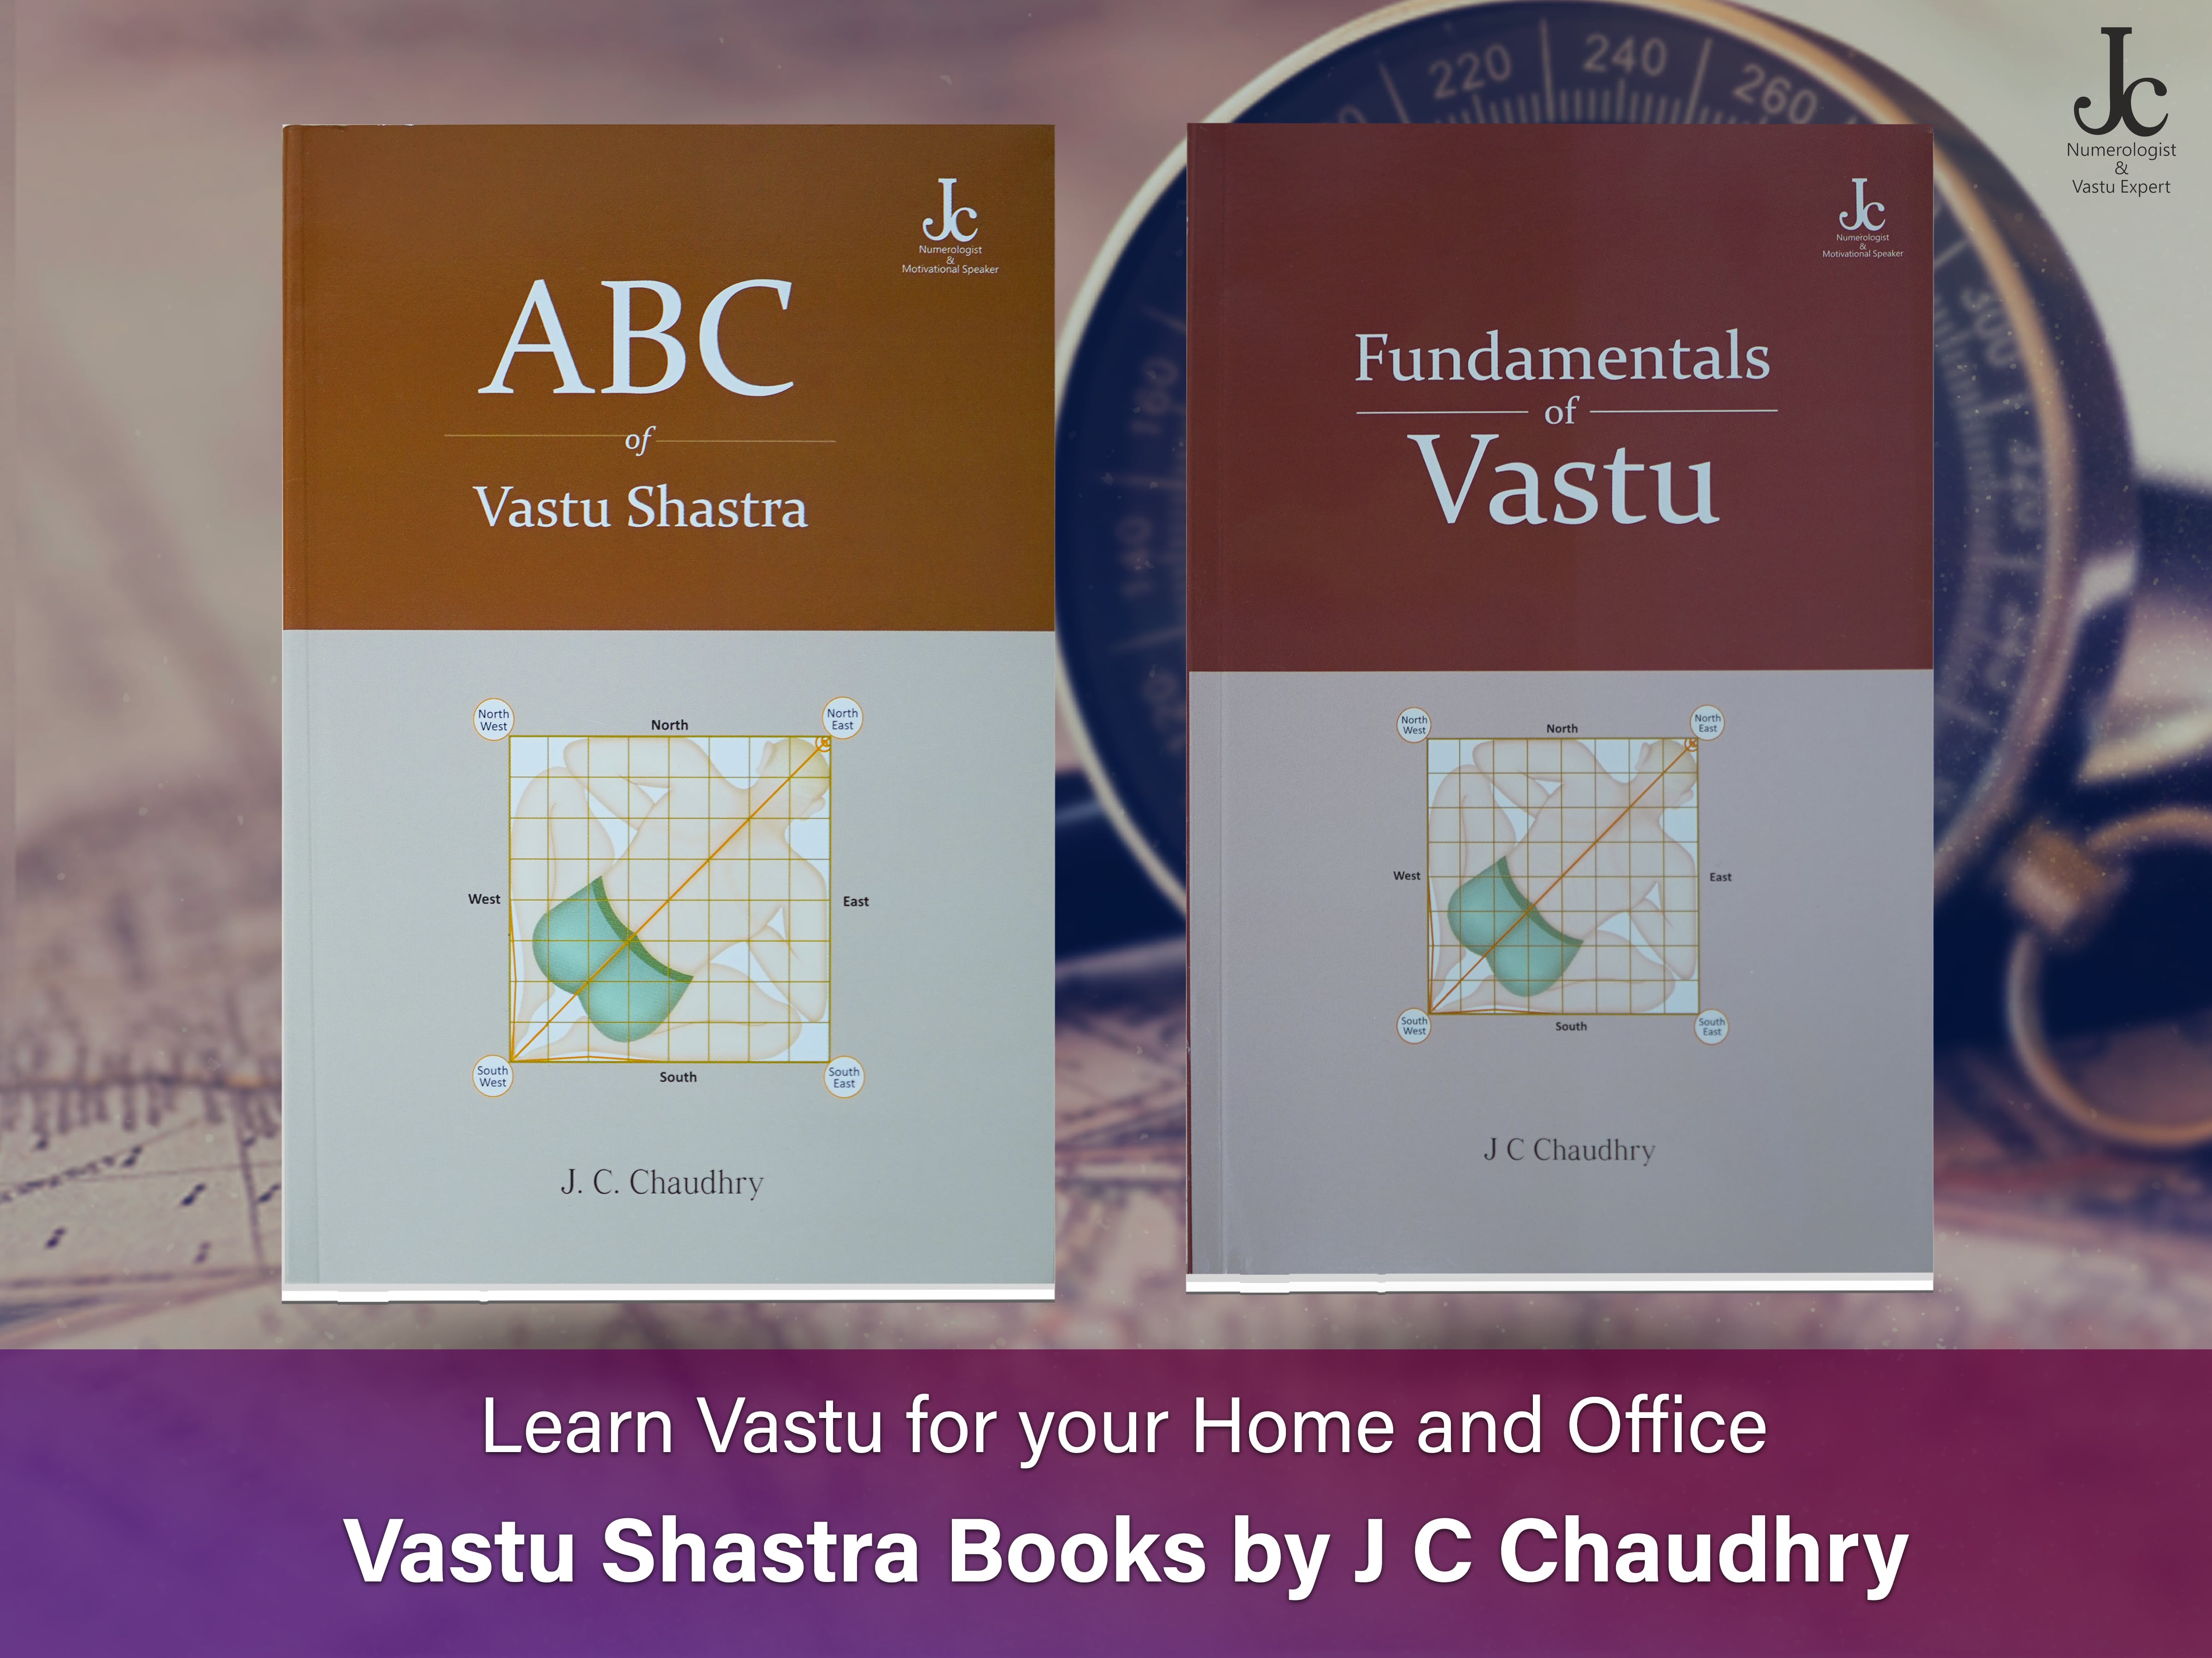 Vastu books by Dr J C Chaudhry 